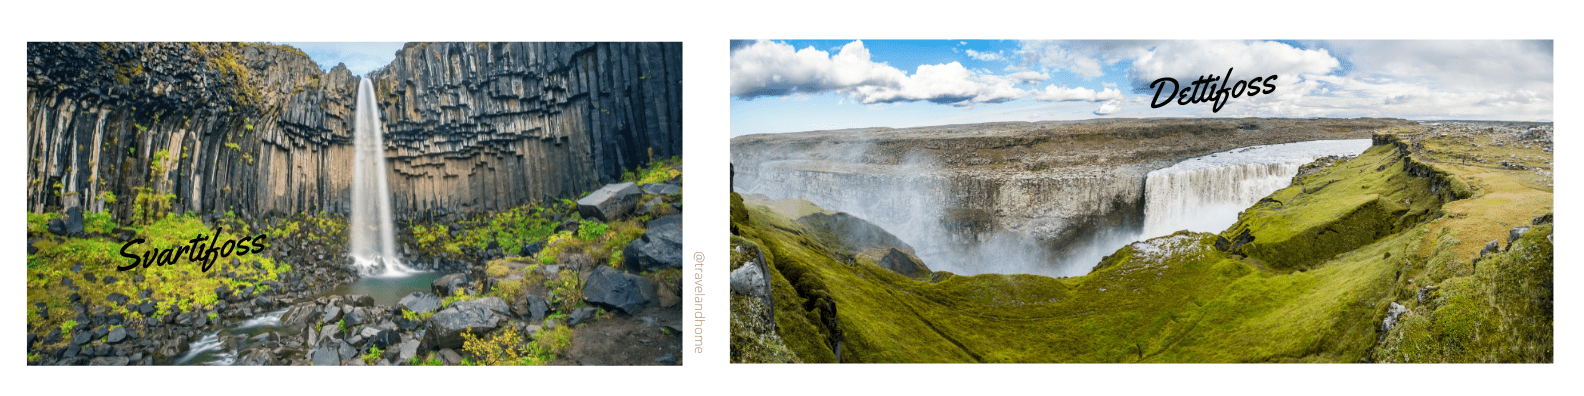 Svartifoss and Dettifoss Waterfalls in Iceland near Jokulsarlon glacial lagoon min